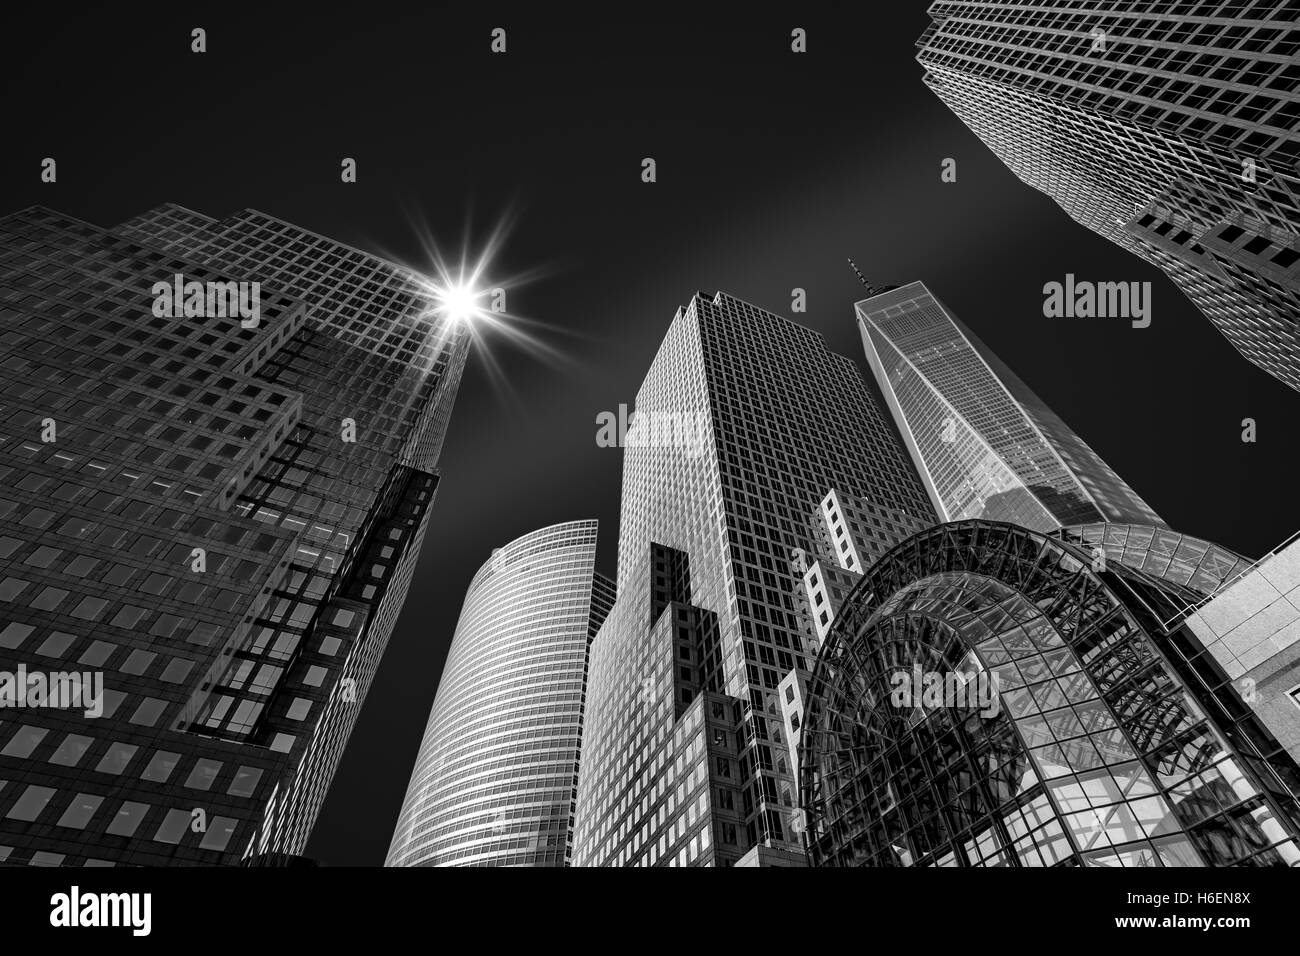 New York City skyscrapers - fine art black and white photograph. Stock Photo